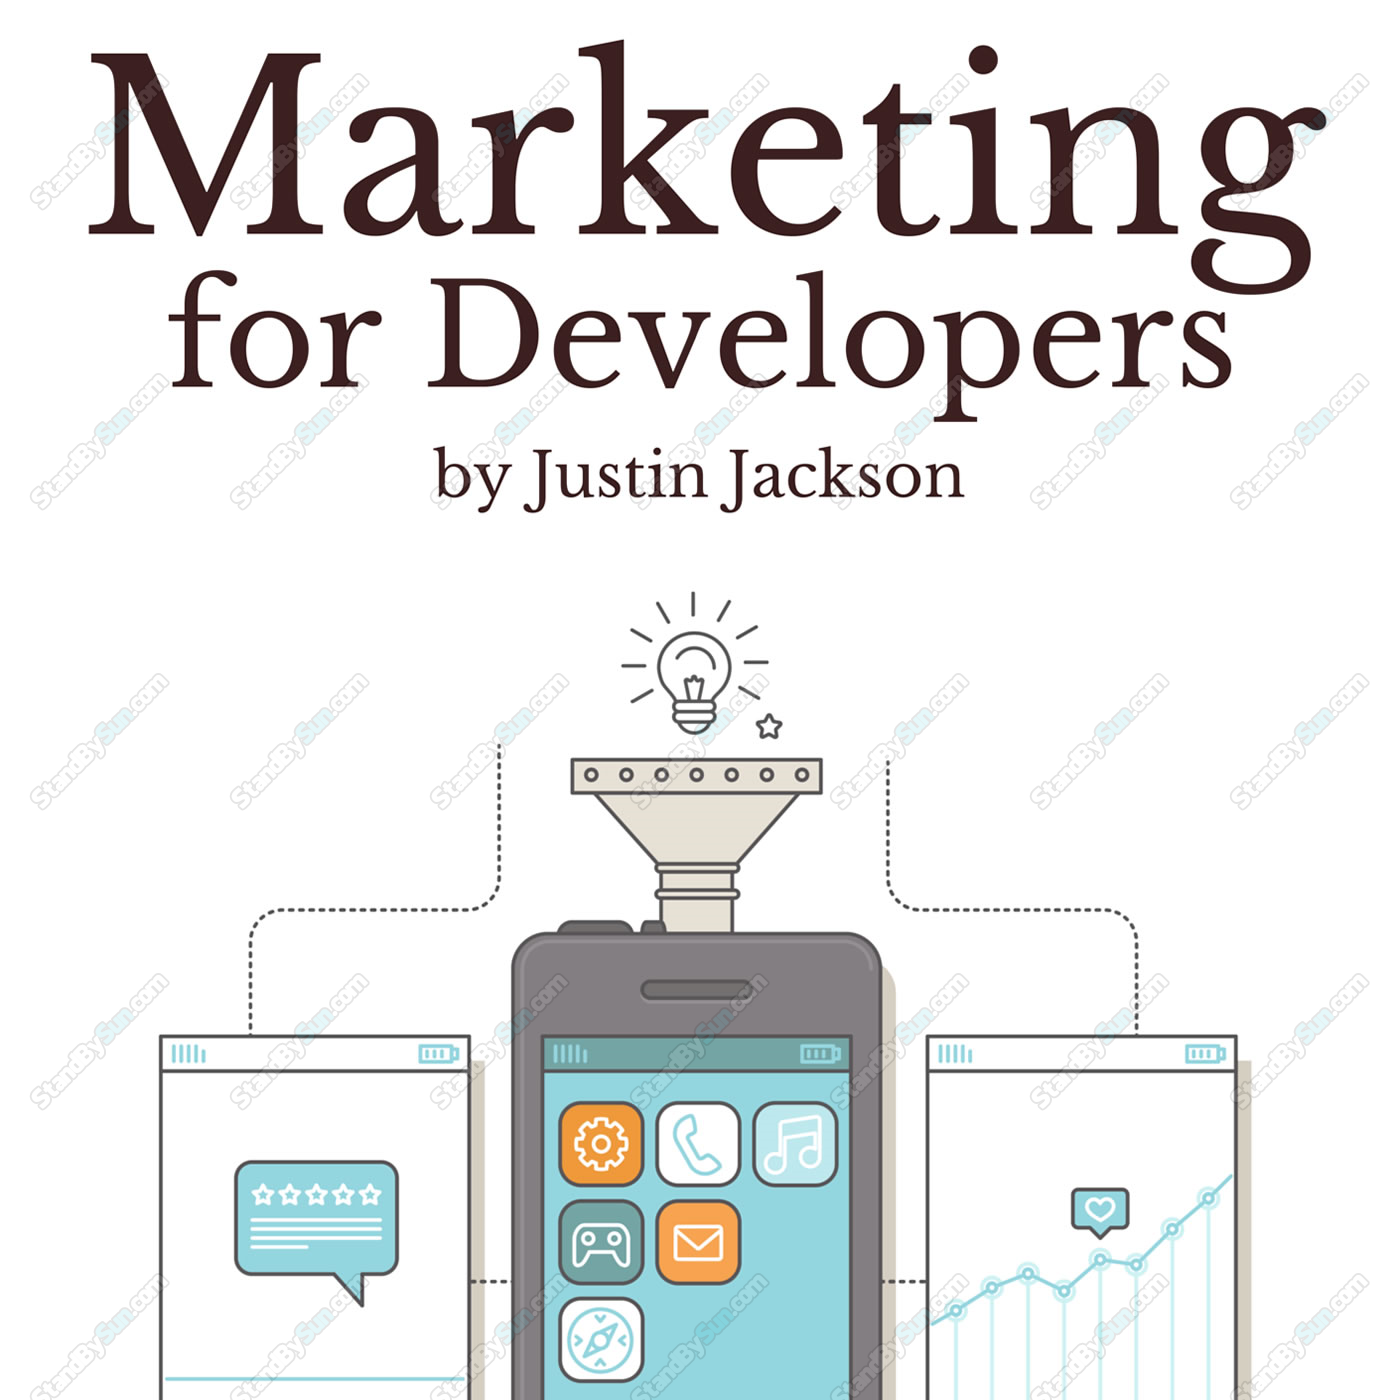 Justin Jackson - Marketing for Developers